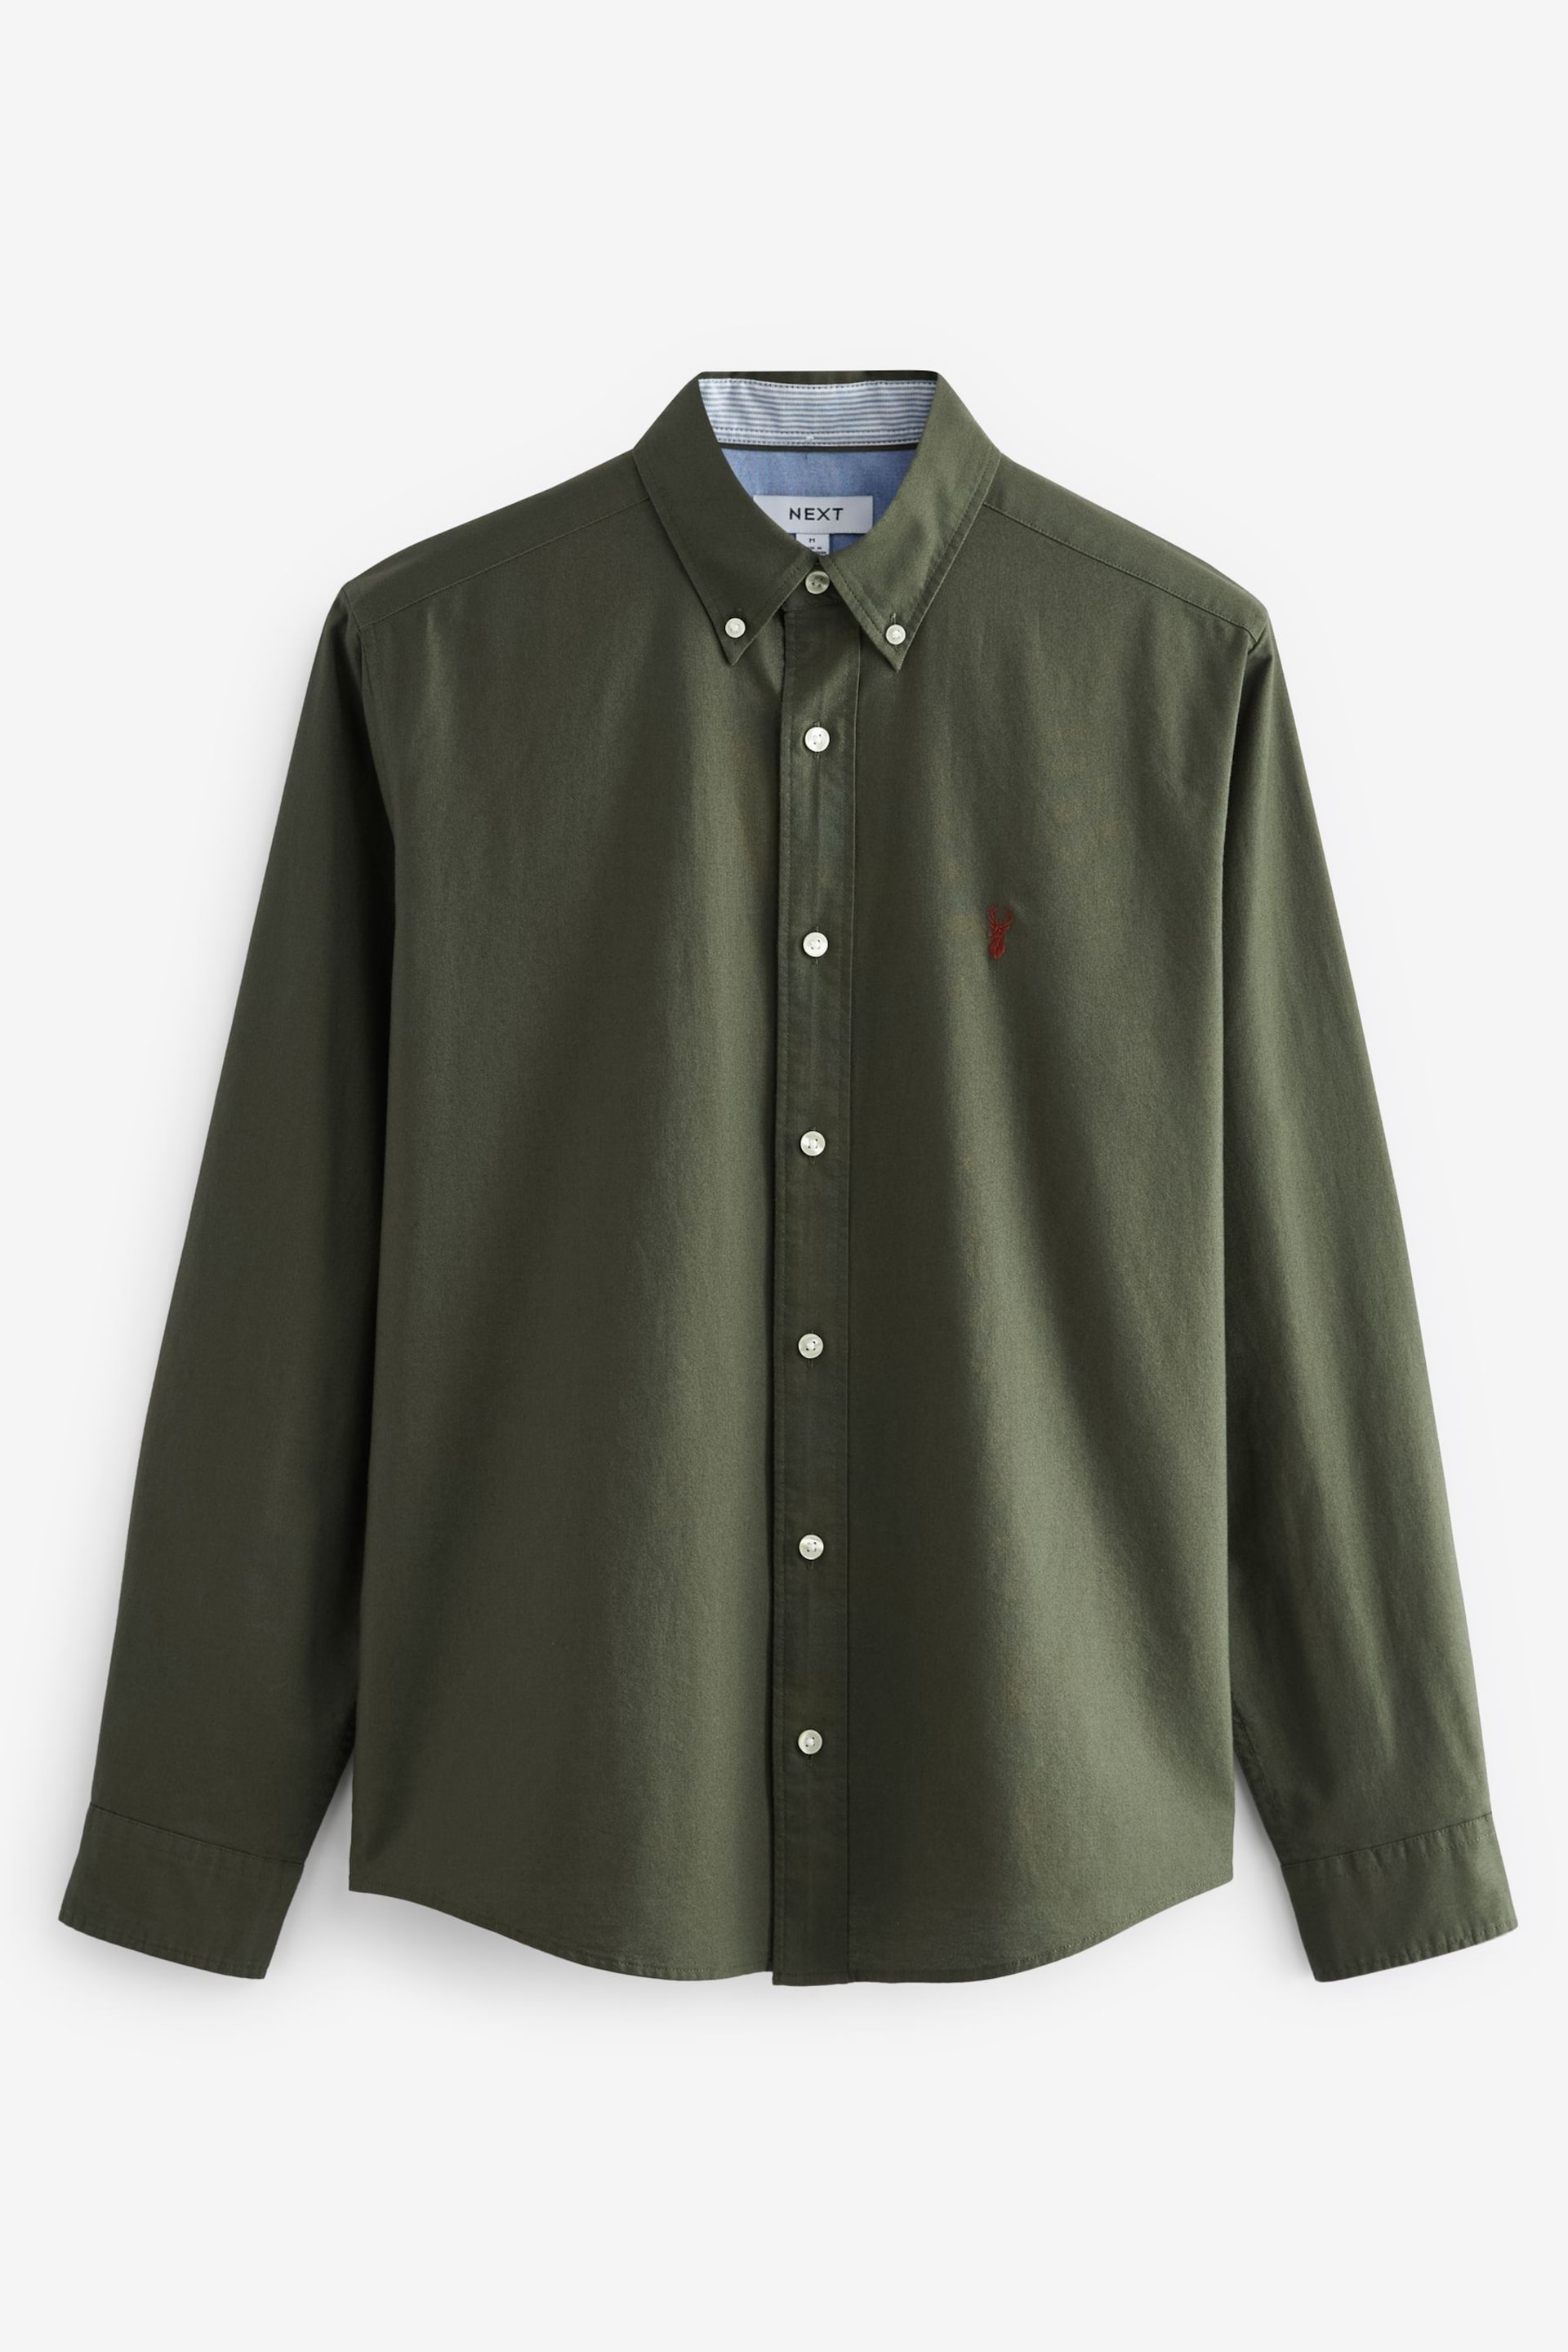 Dark Green Regular Fit Long Sleeve Oxford Shirt - Image 4 of 6